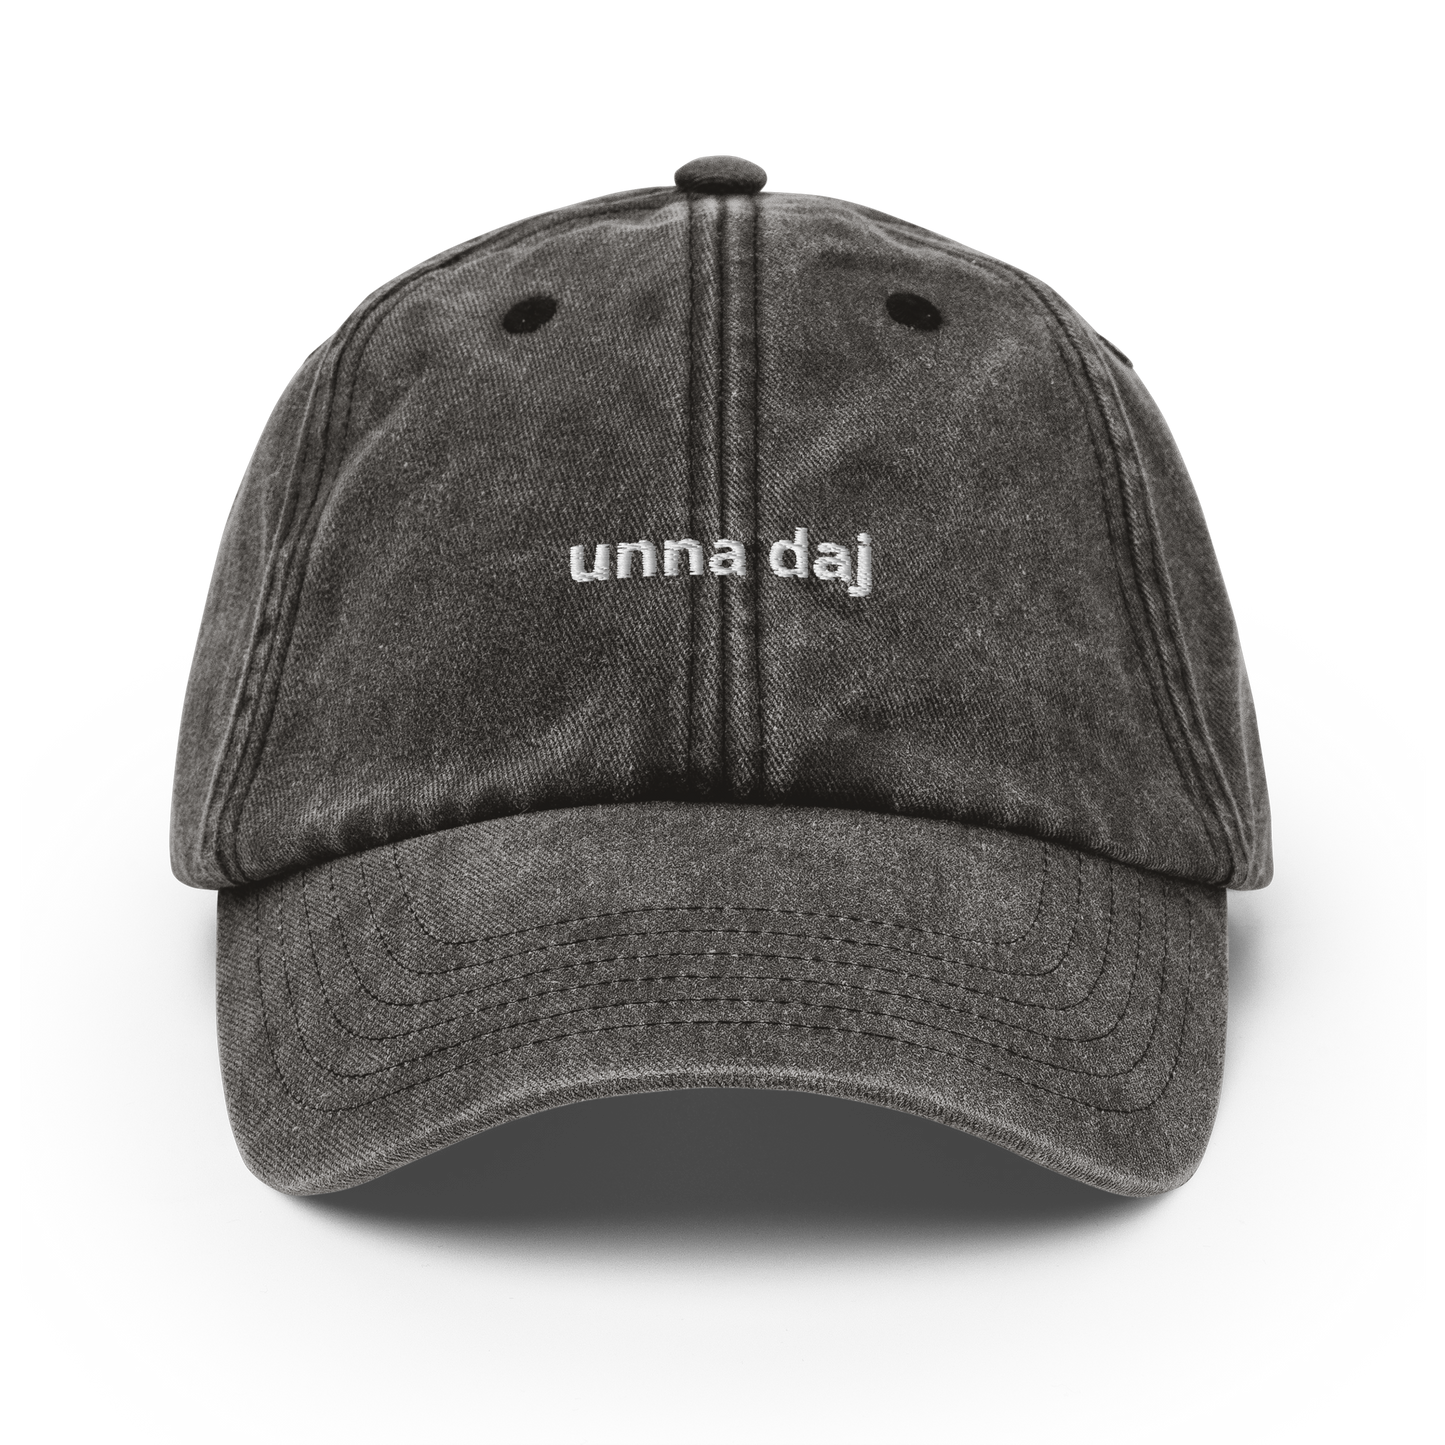 unna daj - vintage hat